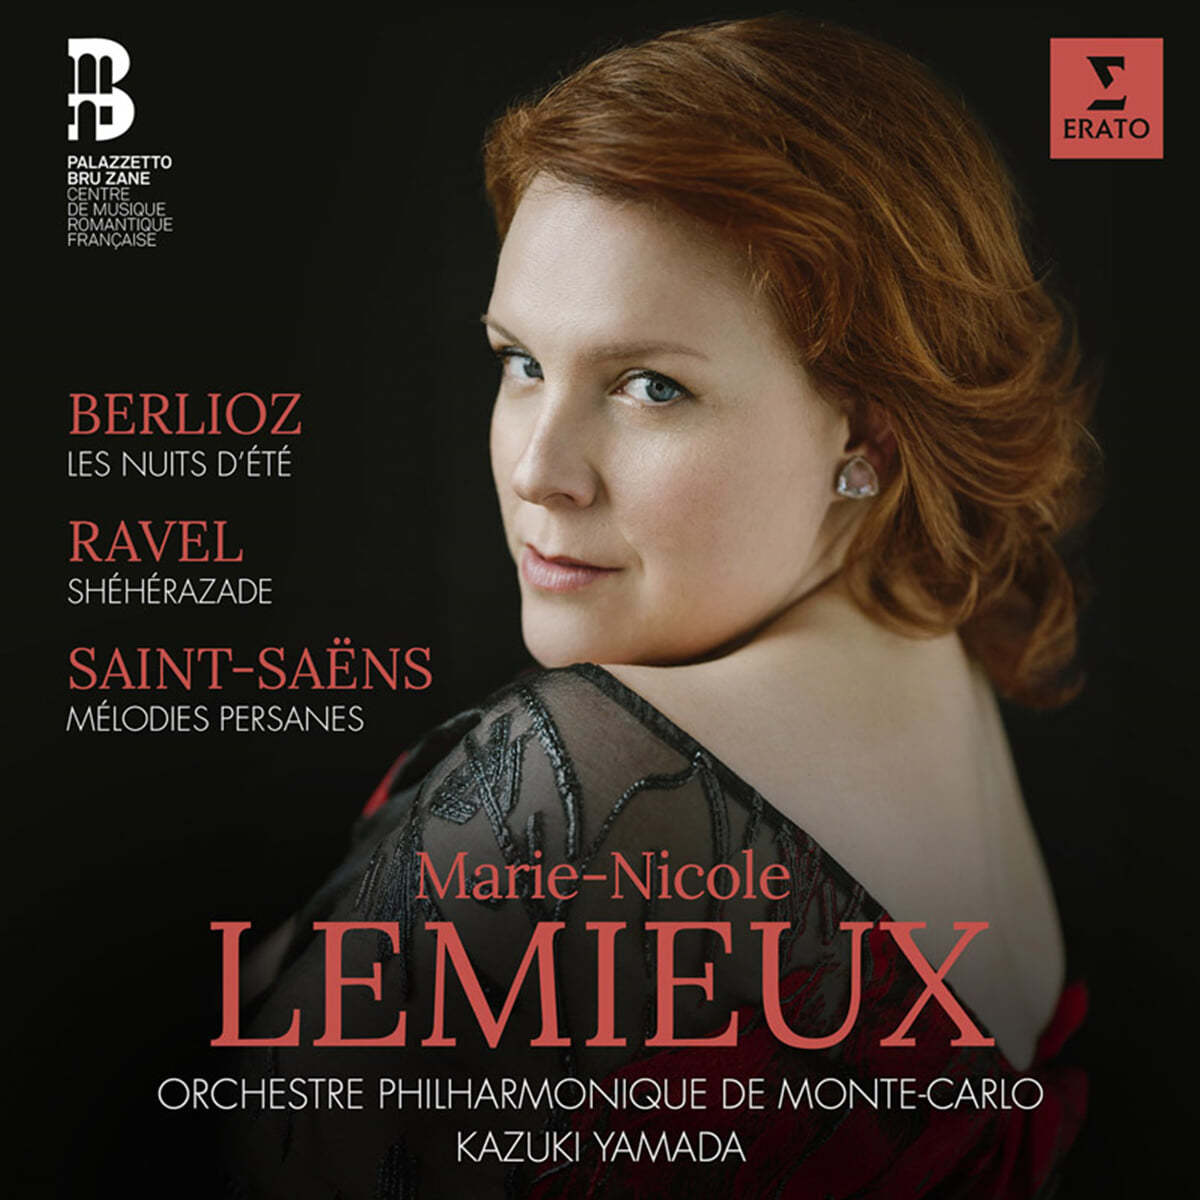 Marie-Nicole Lemieux 베를리오즈: 여름 밤 / 라벨: 세헤라자데 / 생상스: 페르시아의 멜로디 (Berlioz, Ravel &amp; Saint-Saens)